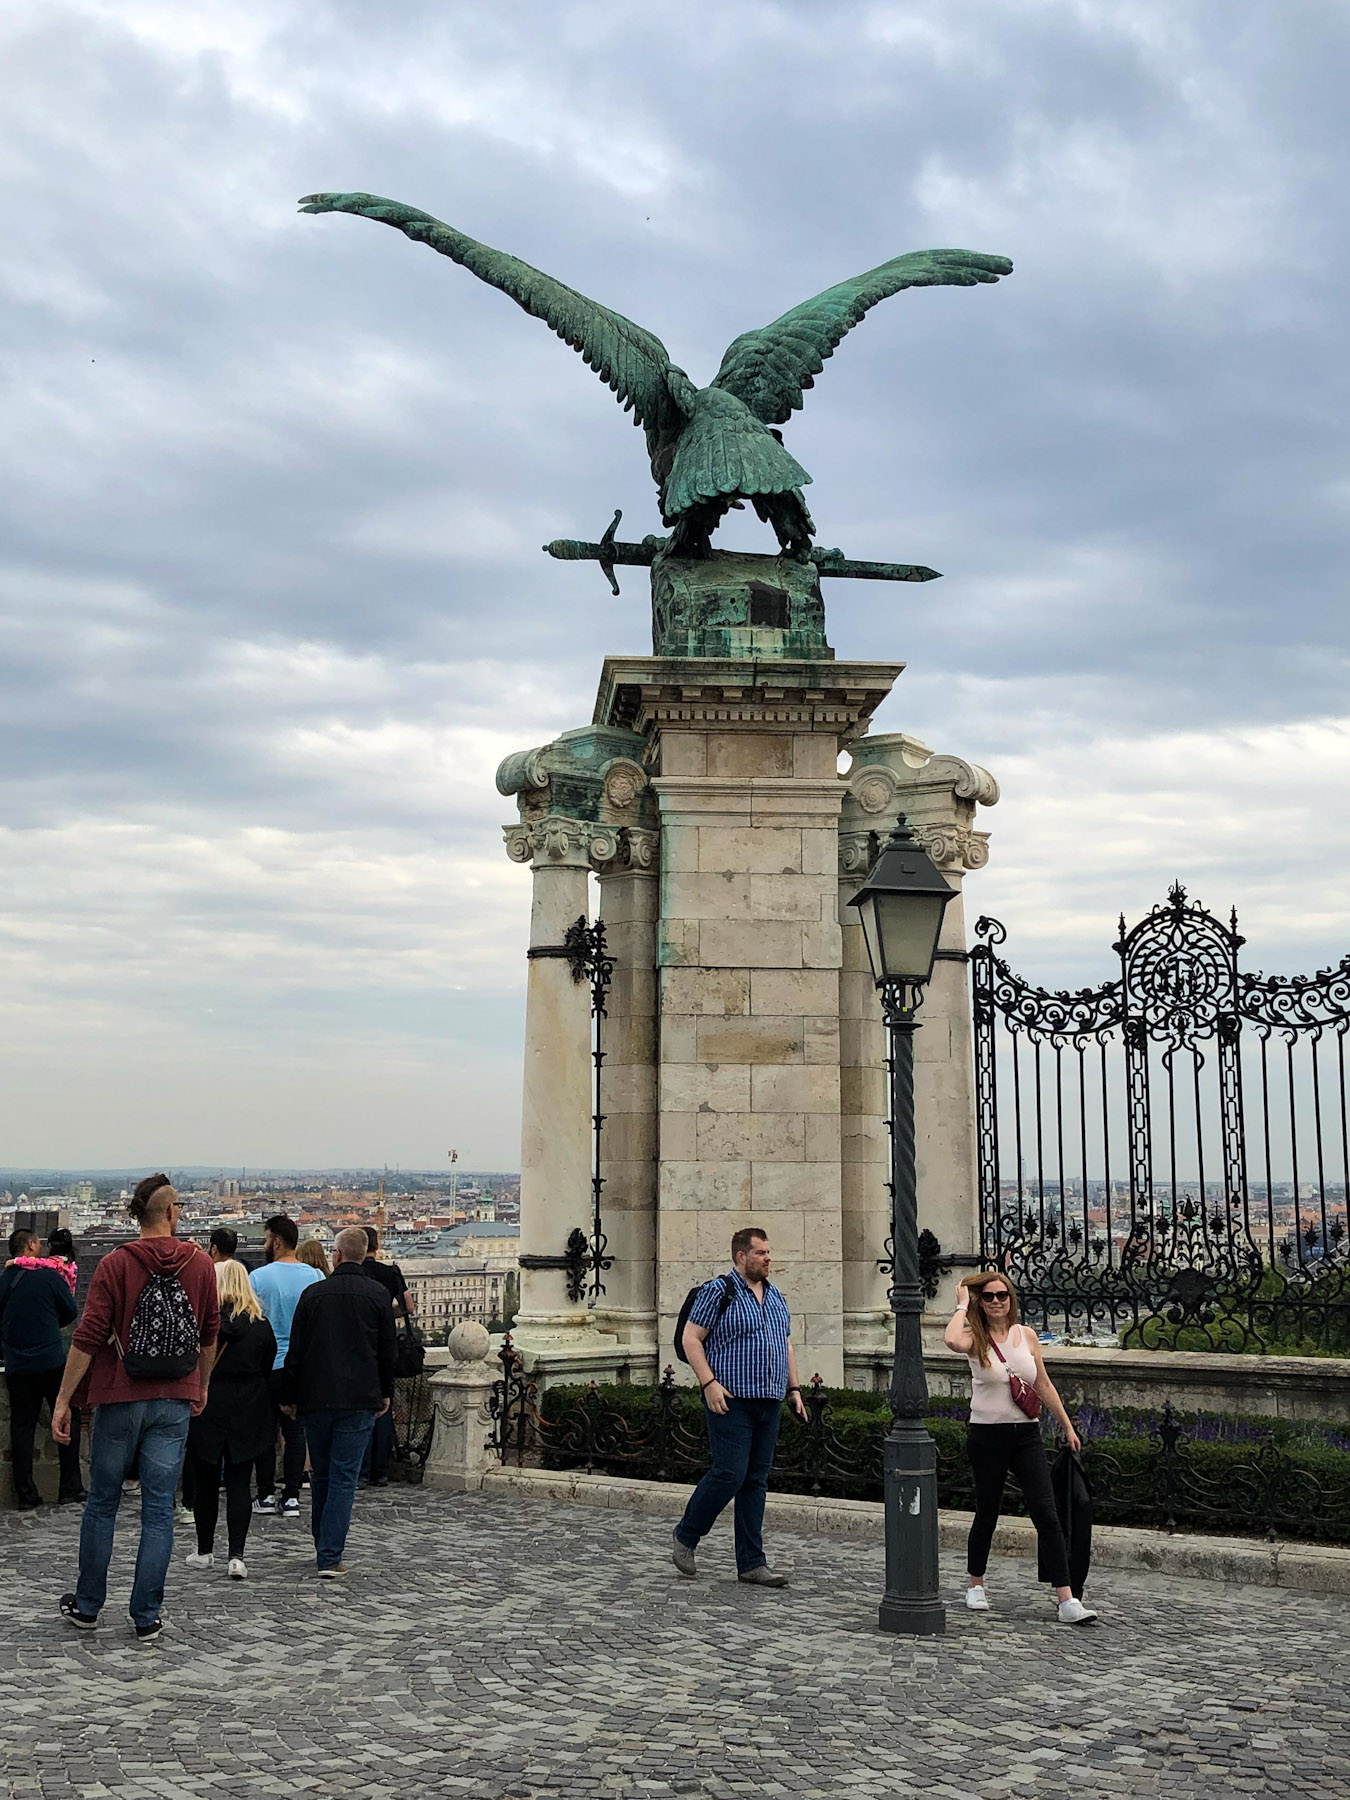 Turul Statue on Castle Hill, Budapest, Hungary